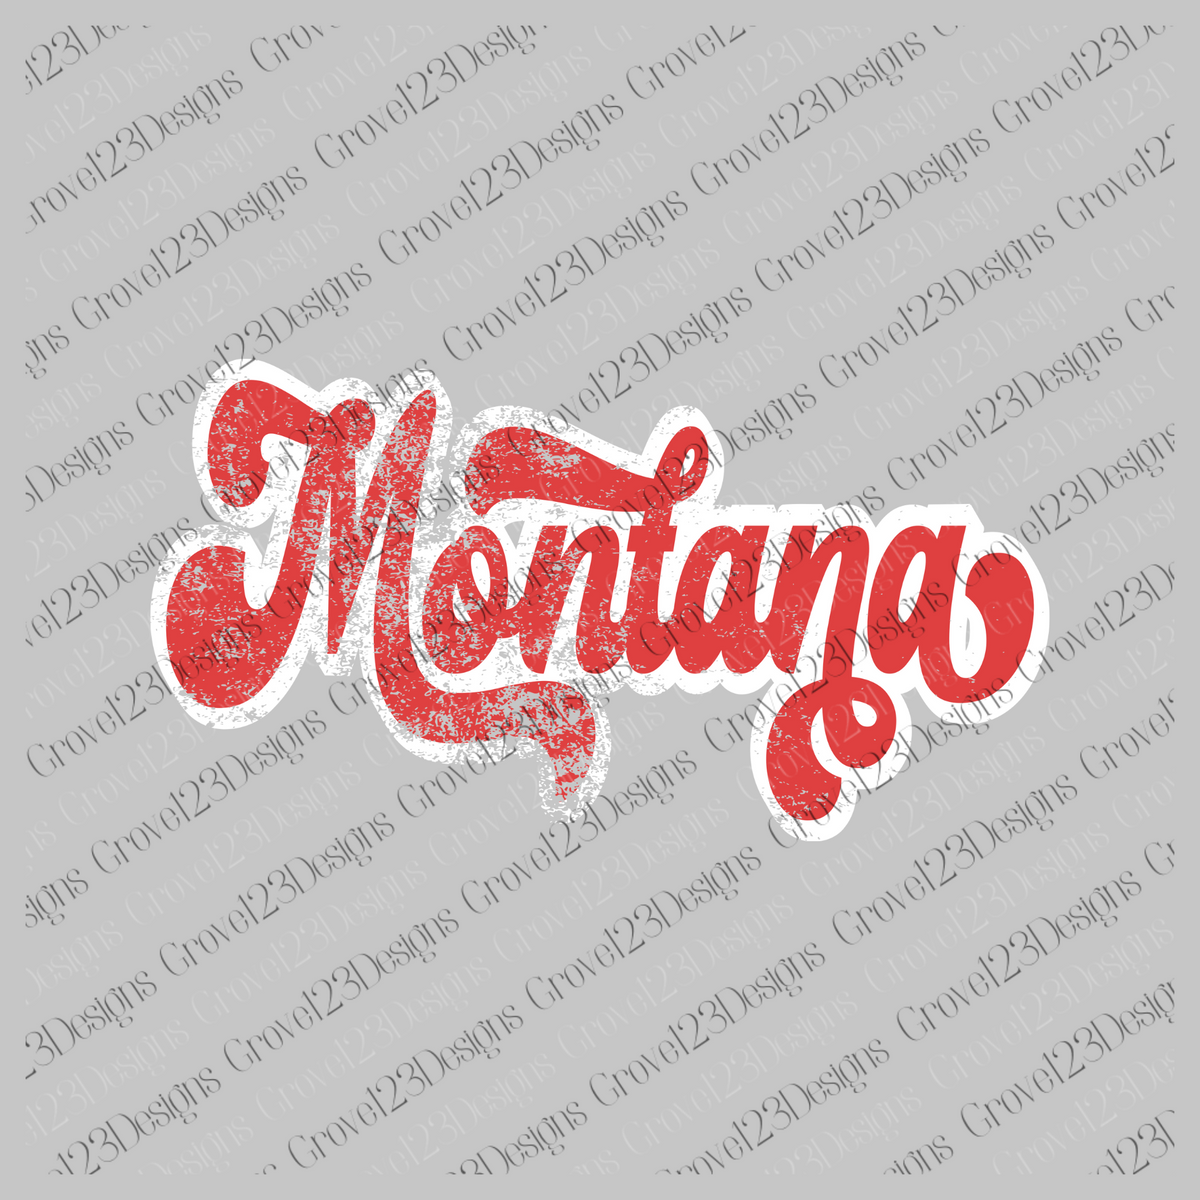 Montana Red & White Retro Shadow Distressed